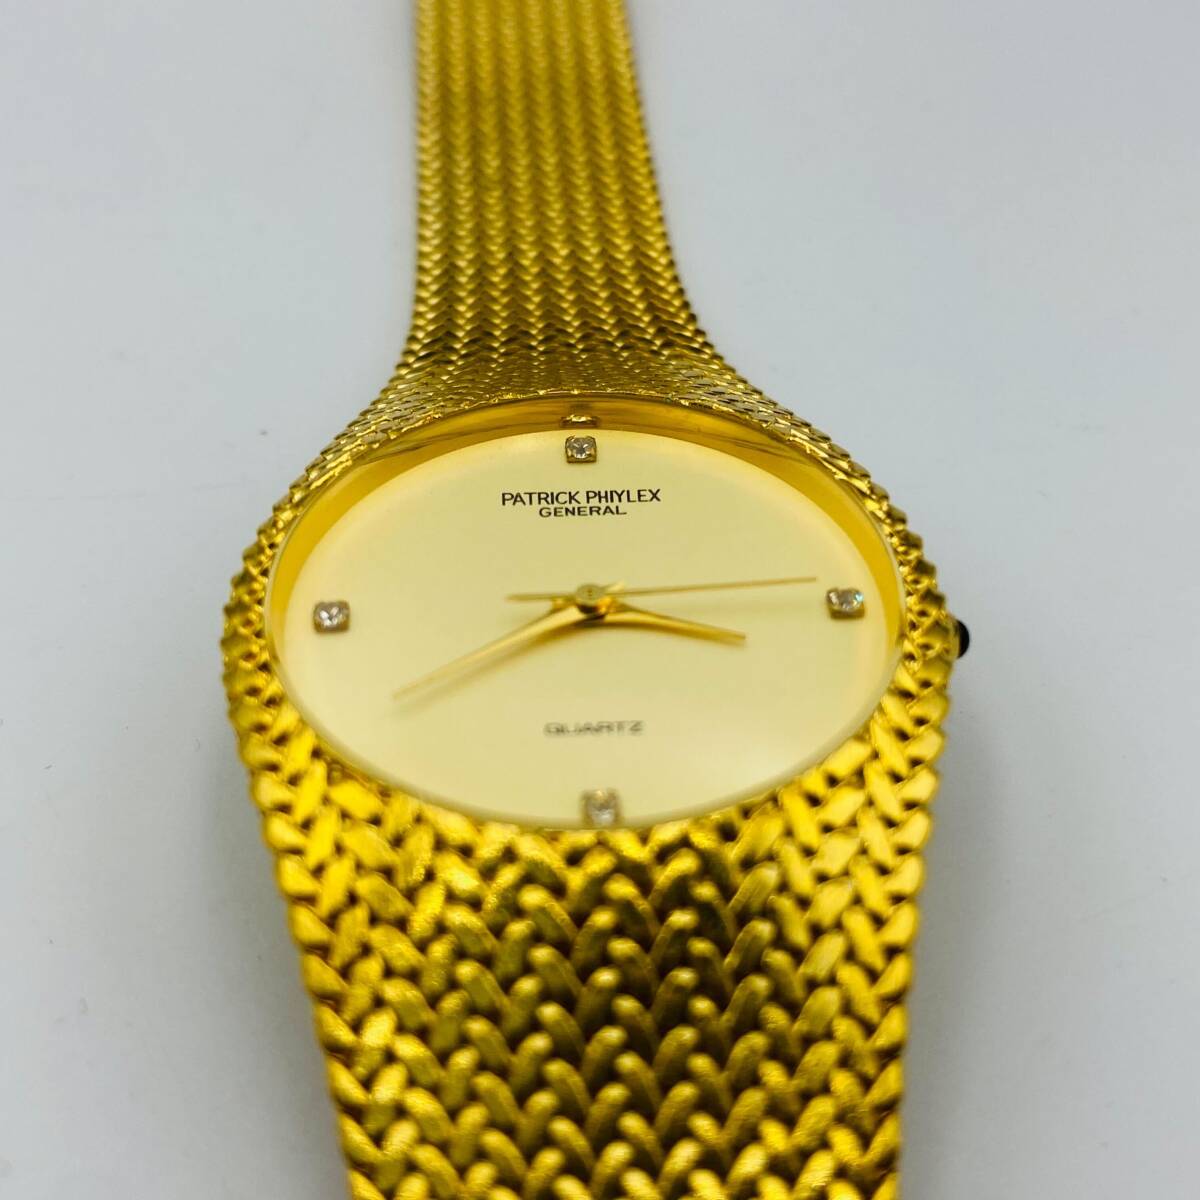 ♪A77191:PATRICK PHIYLEX GENERAL パトリックフィレックス 18KGP クォーツ腕時計 ゴールド ラインストーン 箱付 ジャンクの画像3